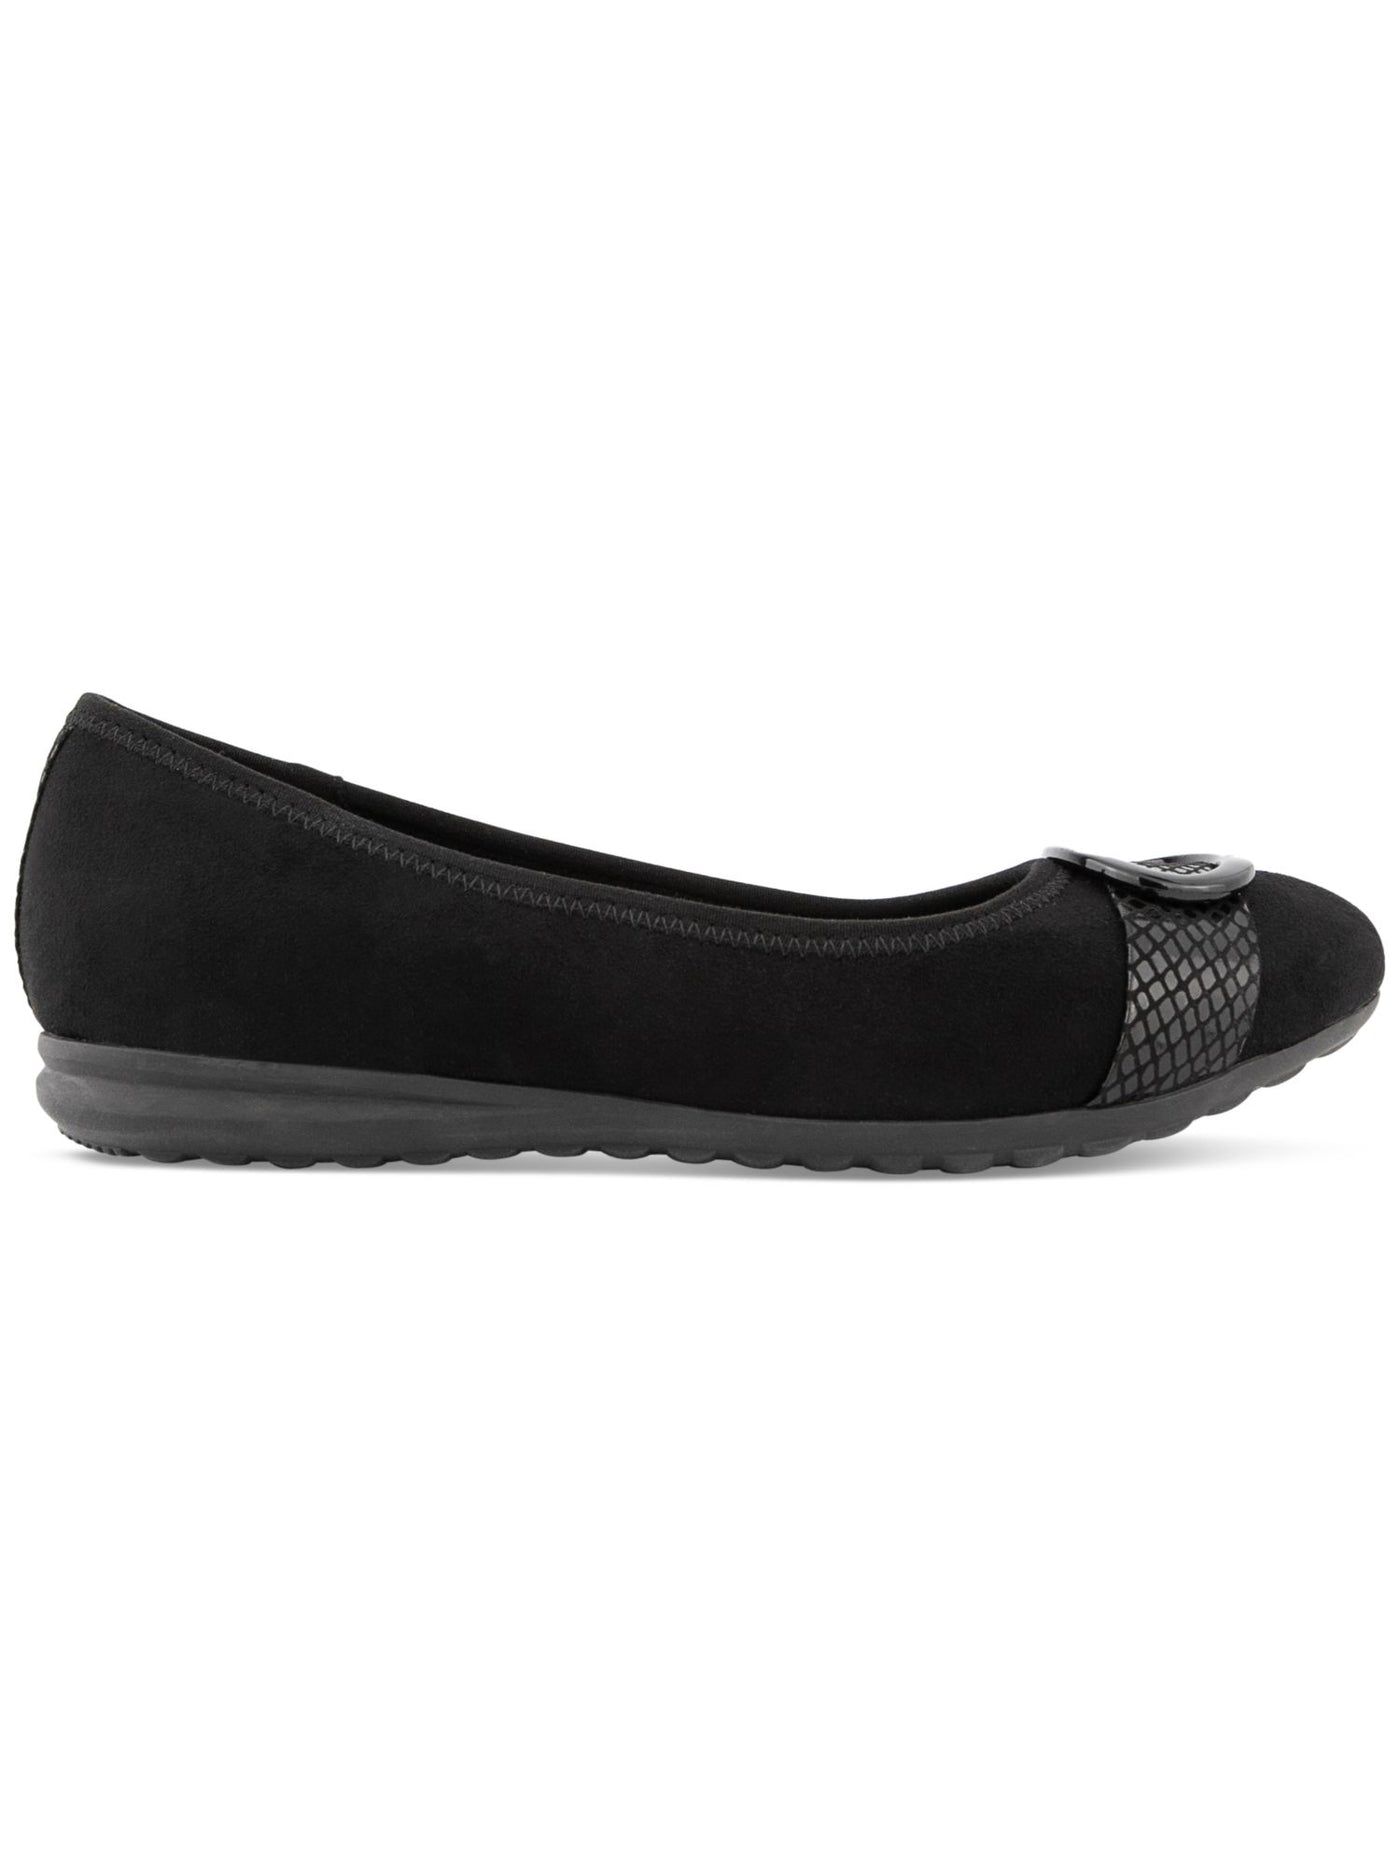 KAREN SCOTT Womens Black Cushioned Tashelle Round Toe Slip On Dress Flats Shoes 5.5 M